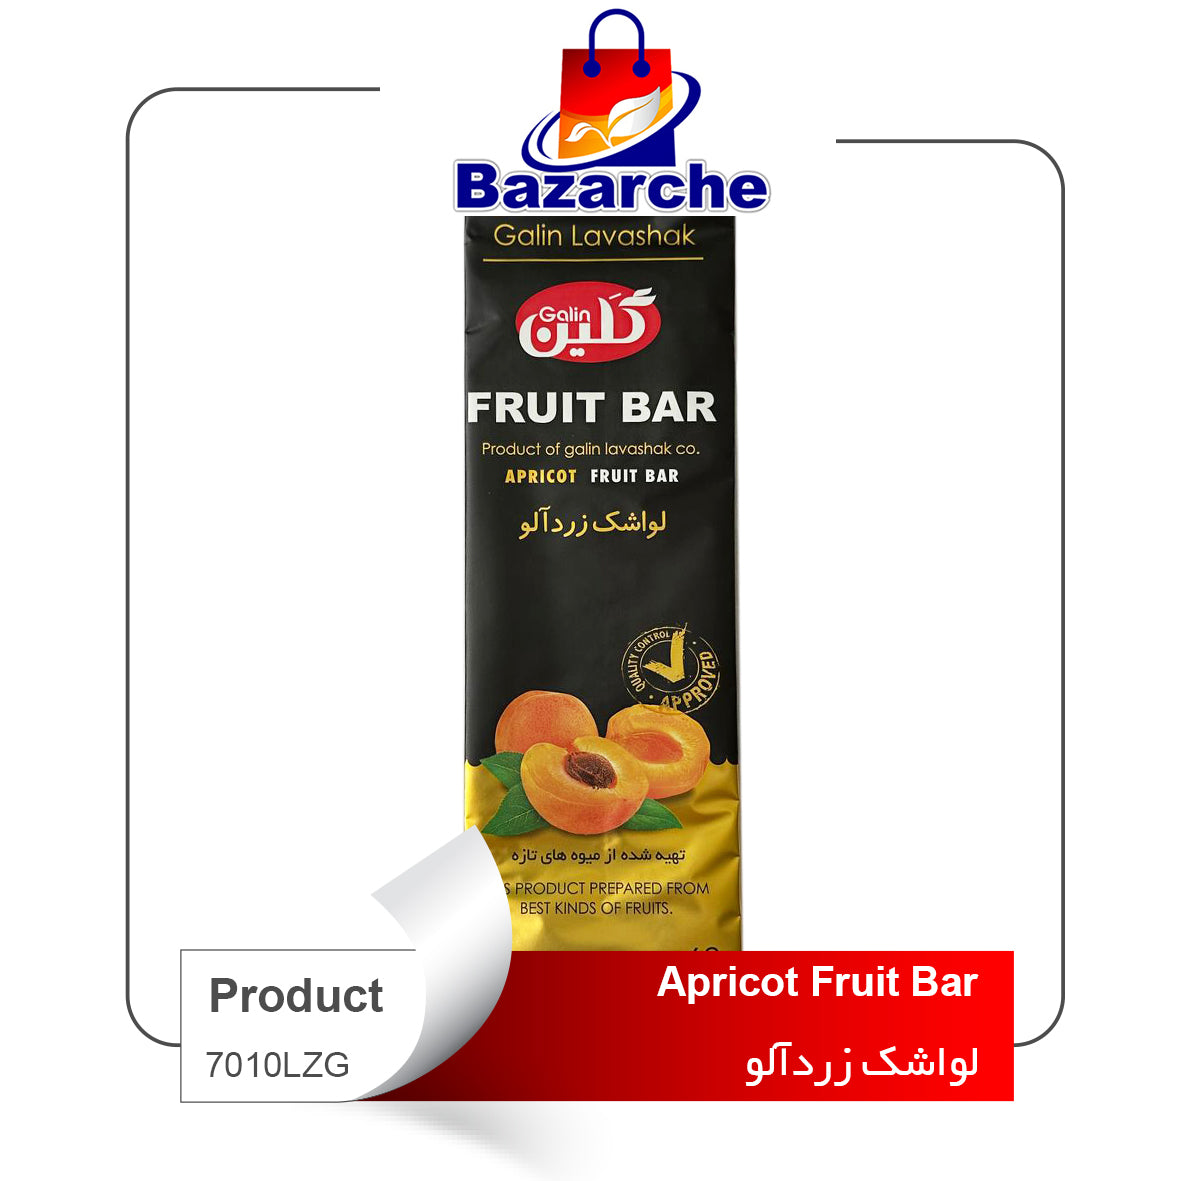 Apricot Fruit Bar